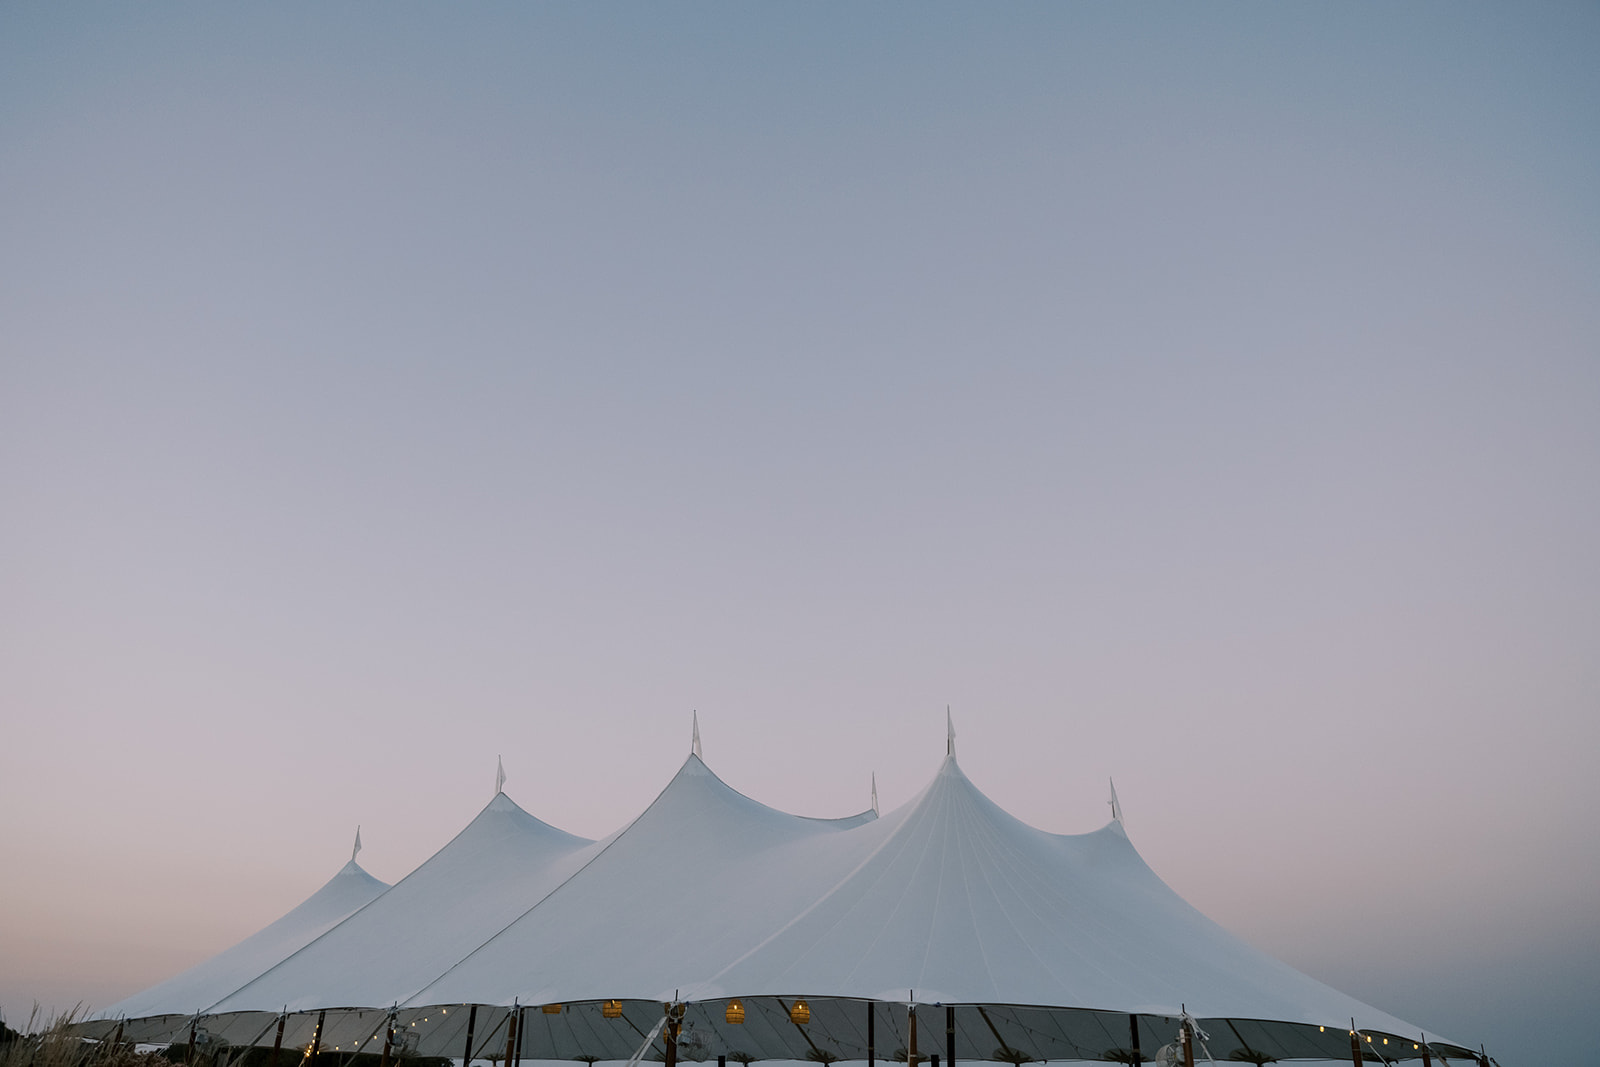 chesapeake bay maritime museum wedding reception tent at sunset